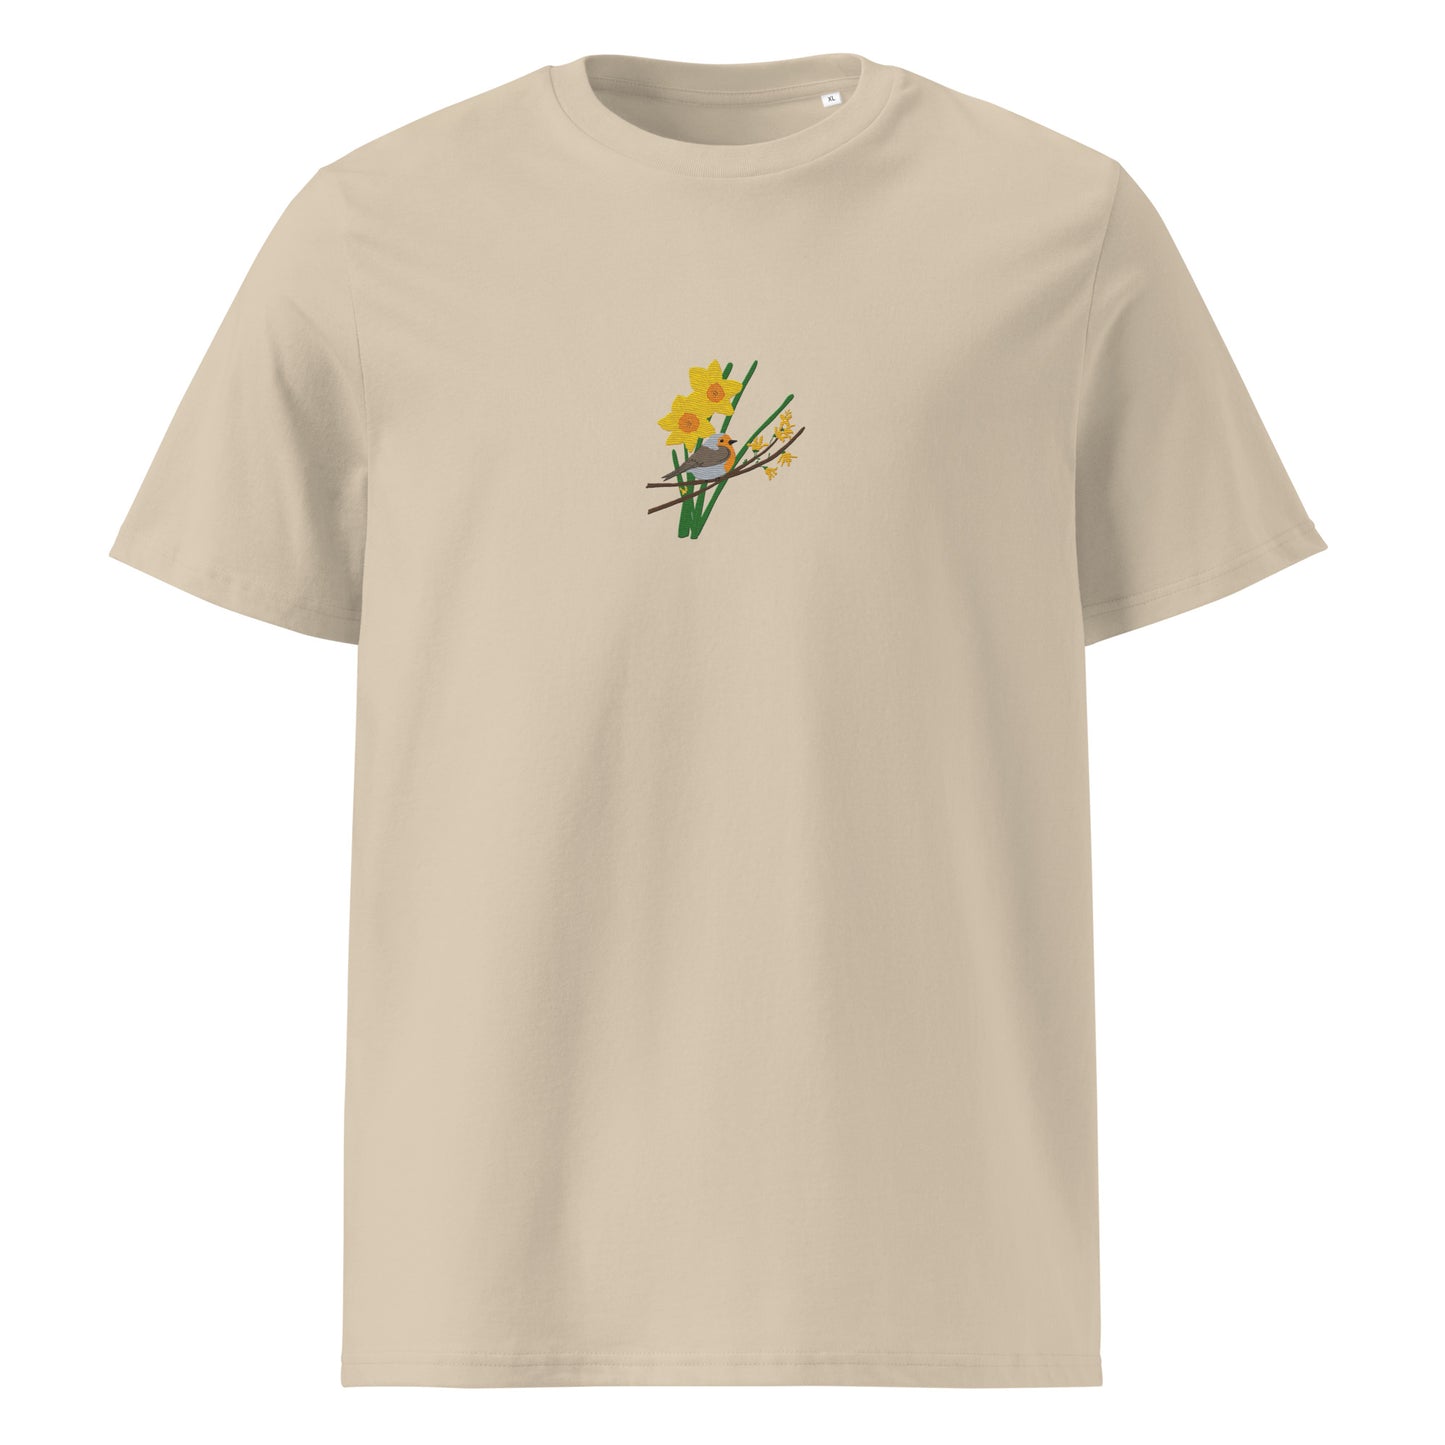 Robin and Daffodils - Unisex luomupuuvillainen t-paita